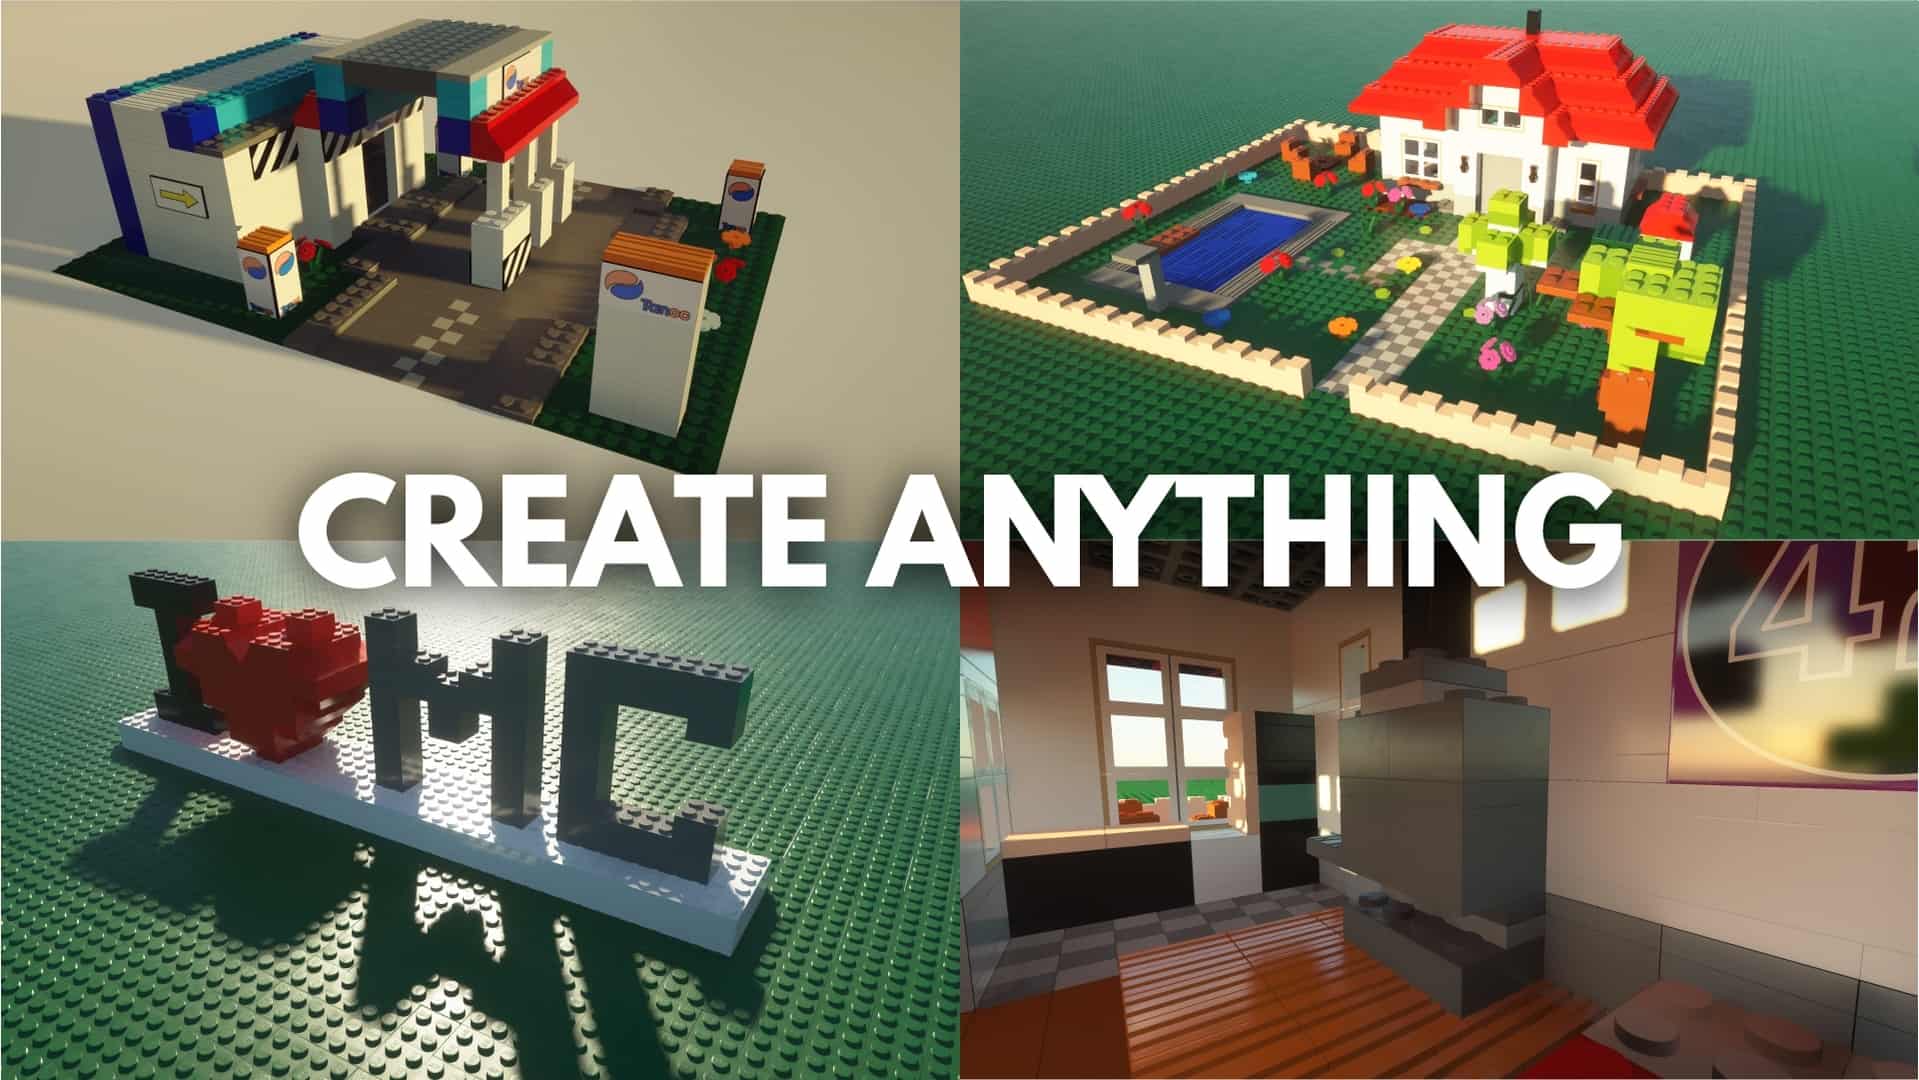 LegoPak  Minecraft Texture Packs